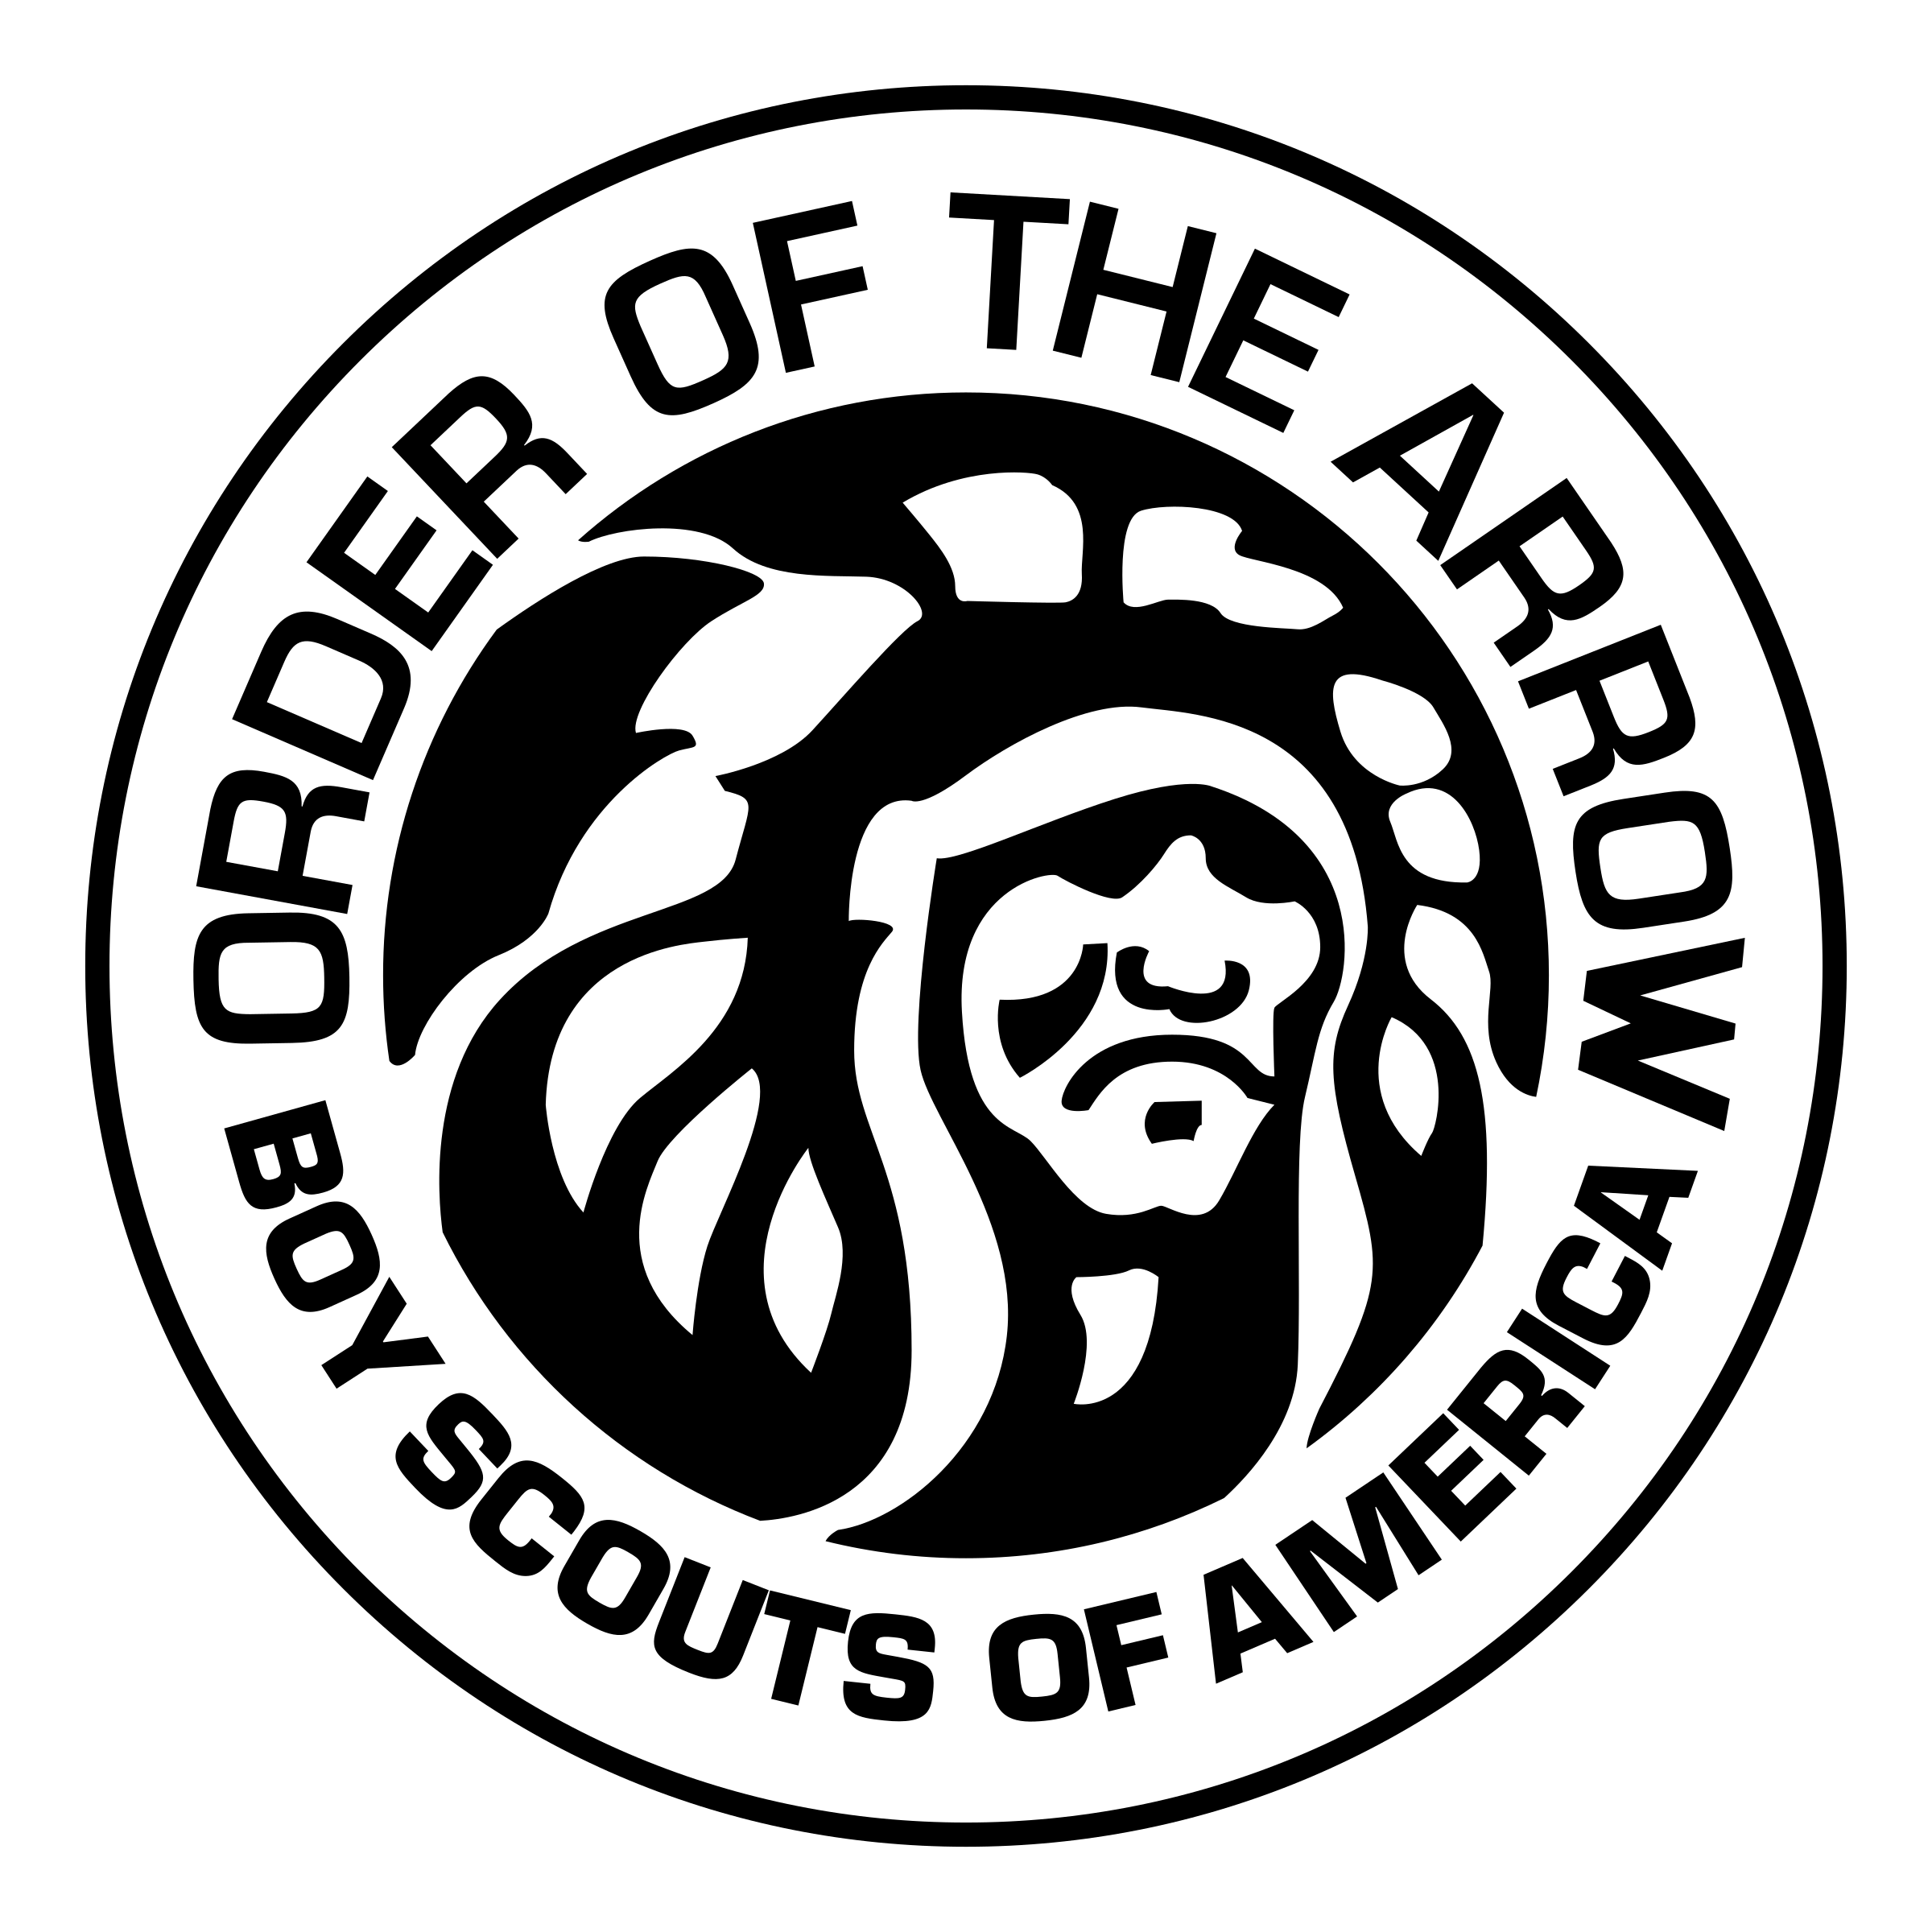 Order of the Arrow Logo - Order Of The Arrow Logo PNG Transparent & SVG Vector - Freebie Supply